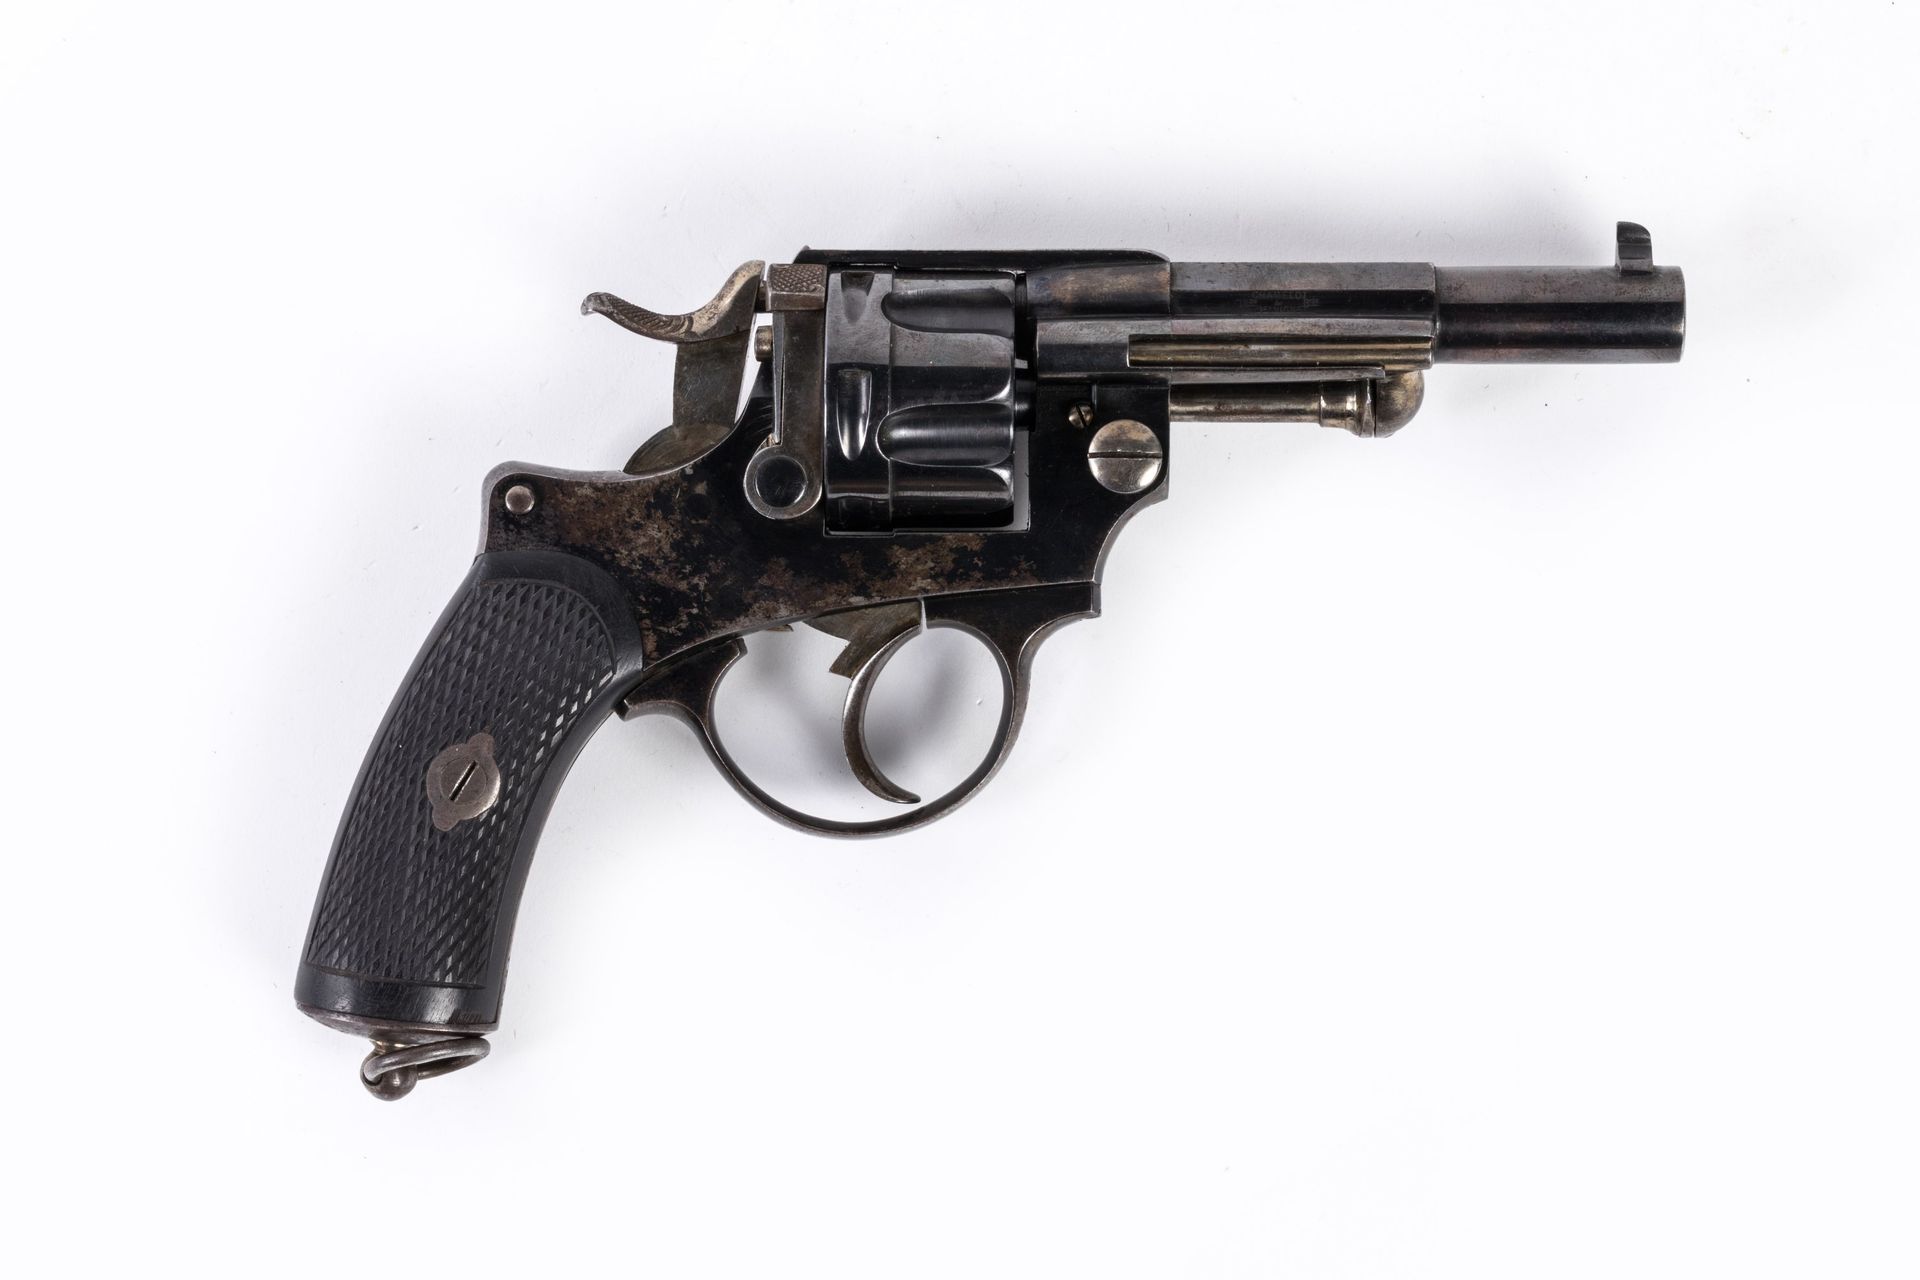 Null 罗兰-波拿巴赠送给加利上尉的礼物
1874 年型夏美洛-德尔维尼军官左轮手枪

六发子弹，口径 11-73毫米。圆形枪管上镌刻有 "H FAURE L&hellip;